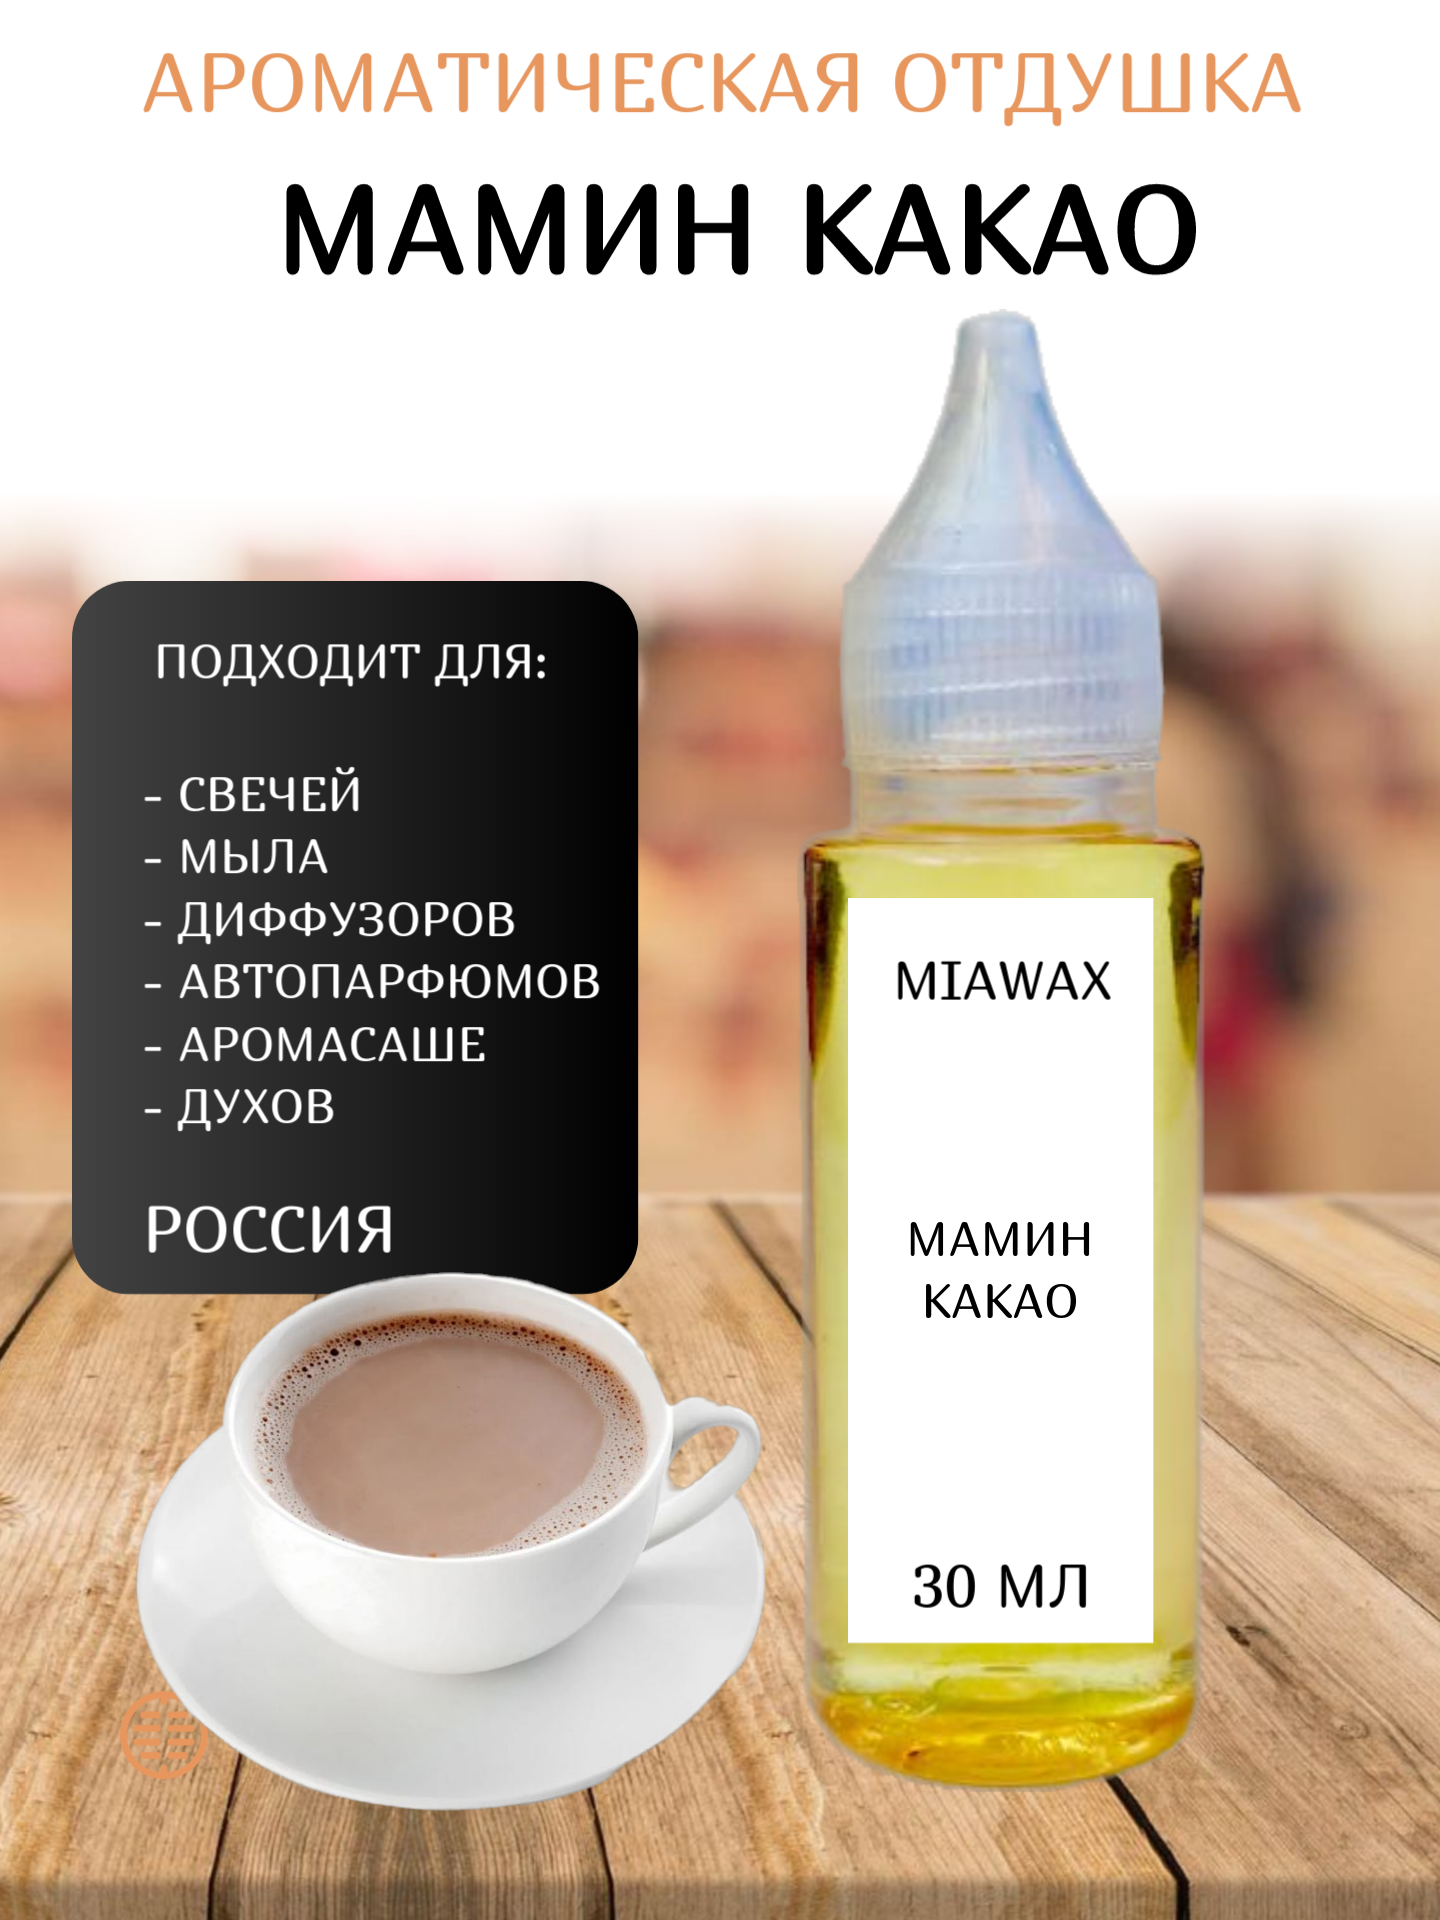 Отдушка MIAWAX Мамин какао, 30 мл